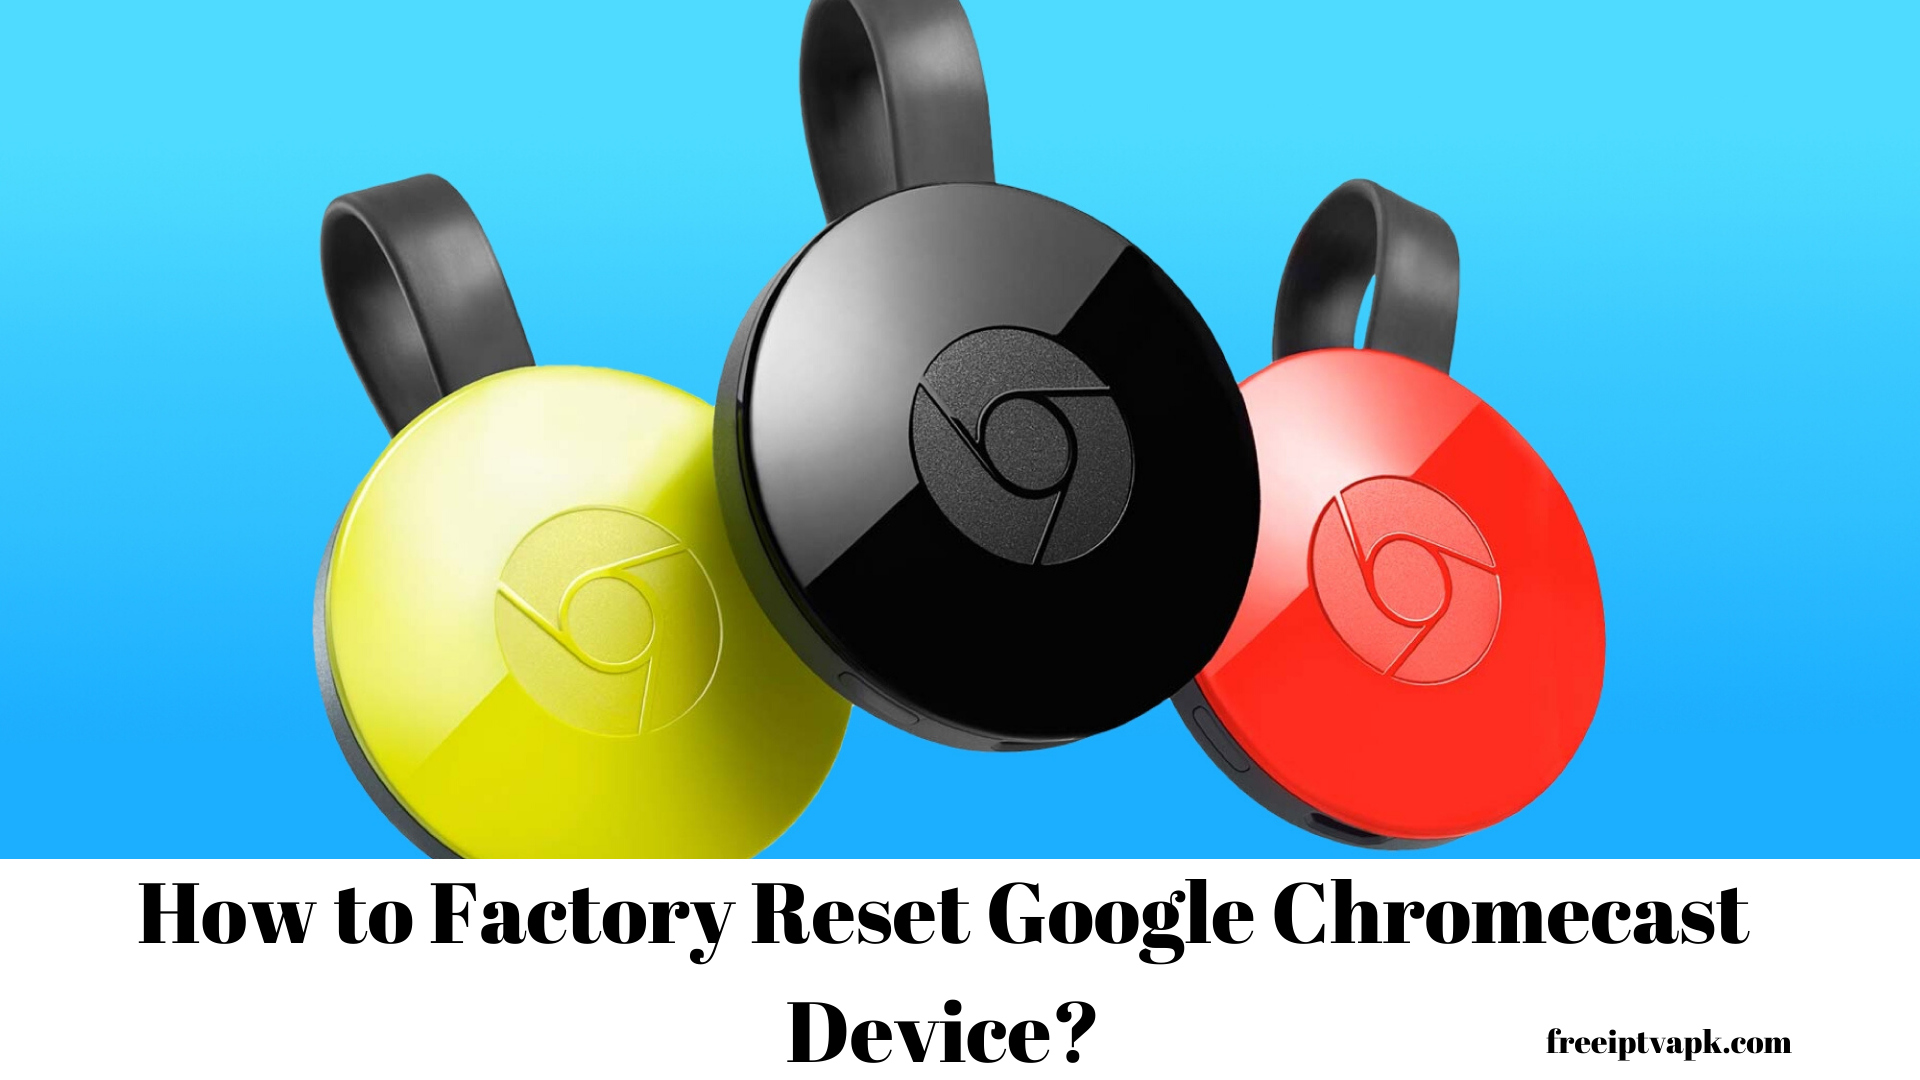 How to Factory Reset Google Chromecast Device